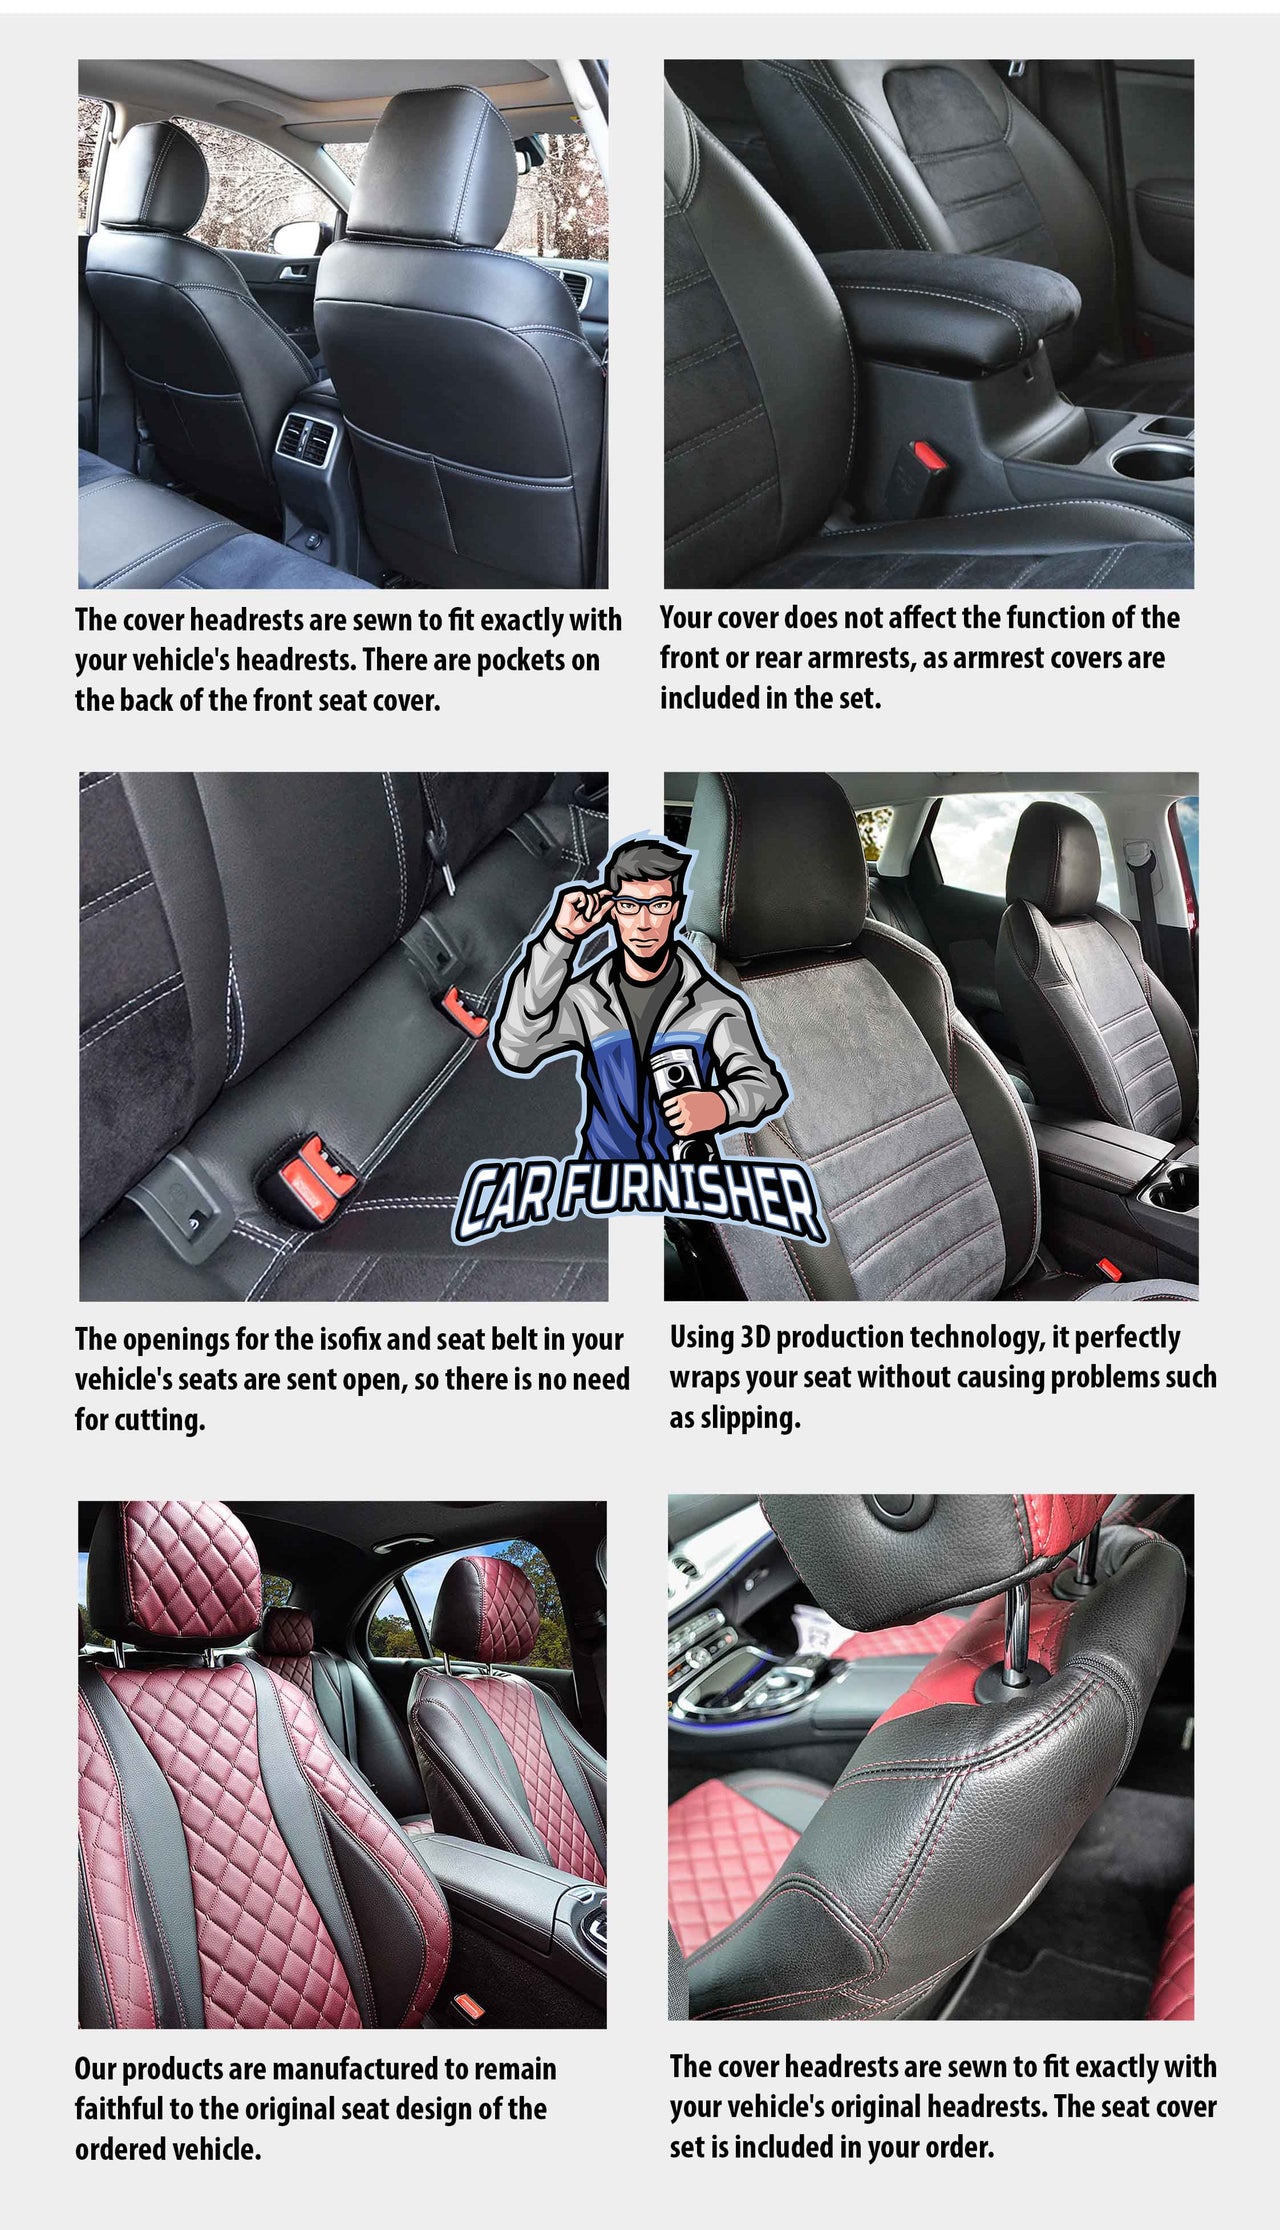 Fiat Brava Seat Covers Madrid Leather Design Beige Leather